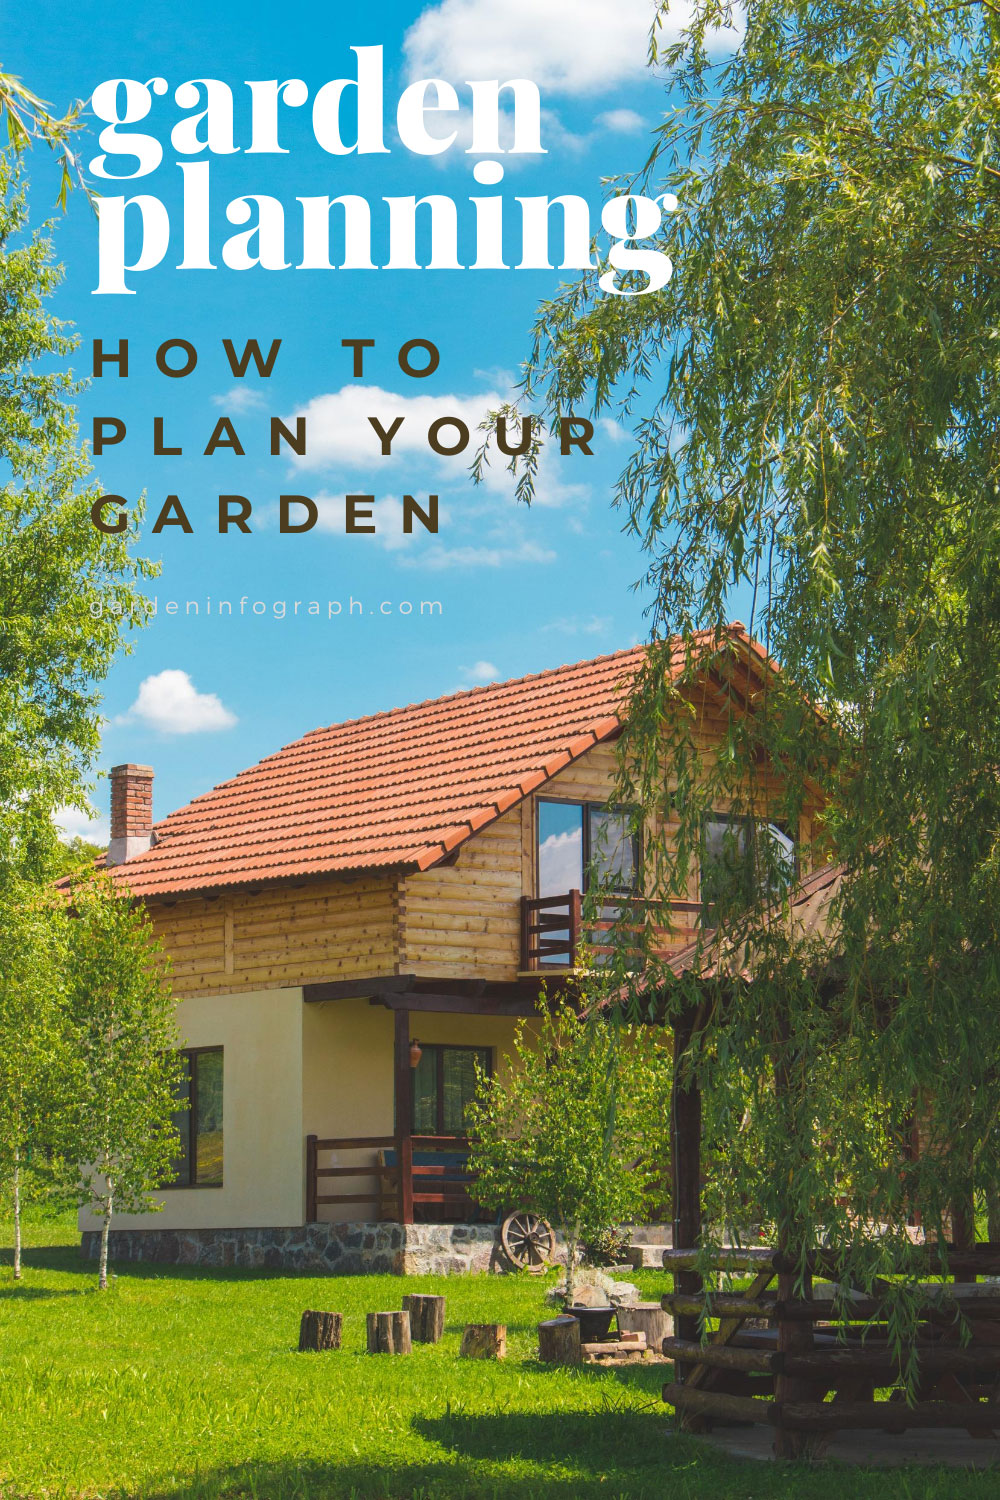 garden planning | planning your garden | how to plan your garden